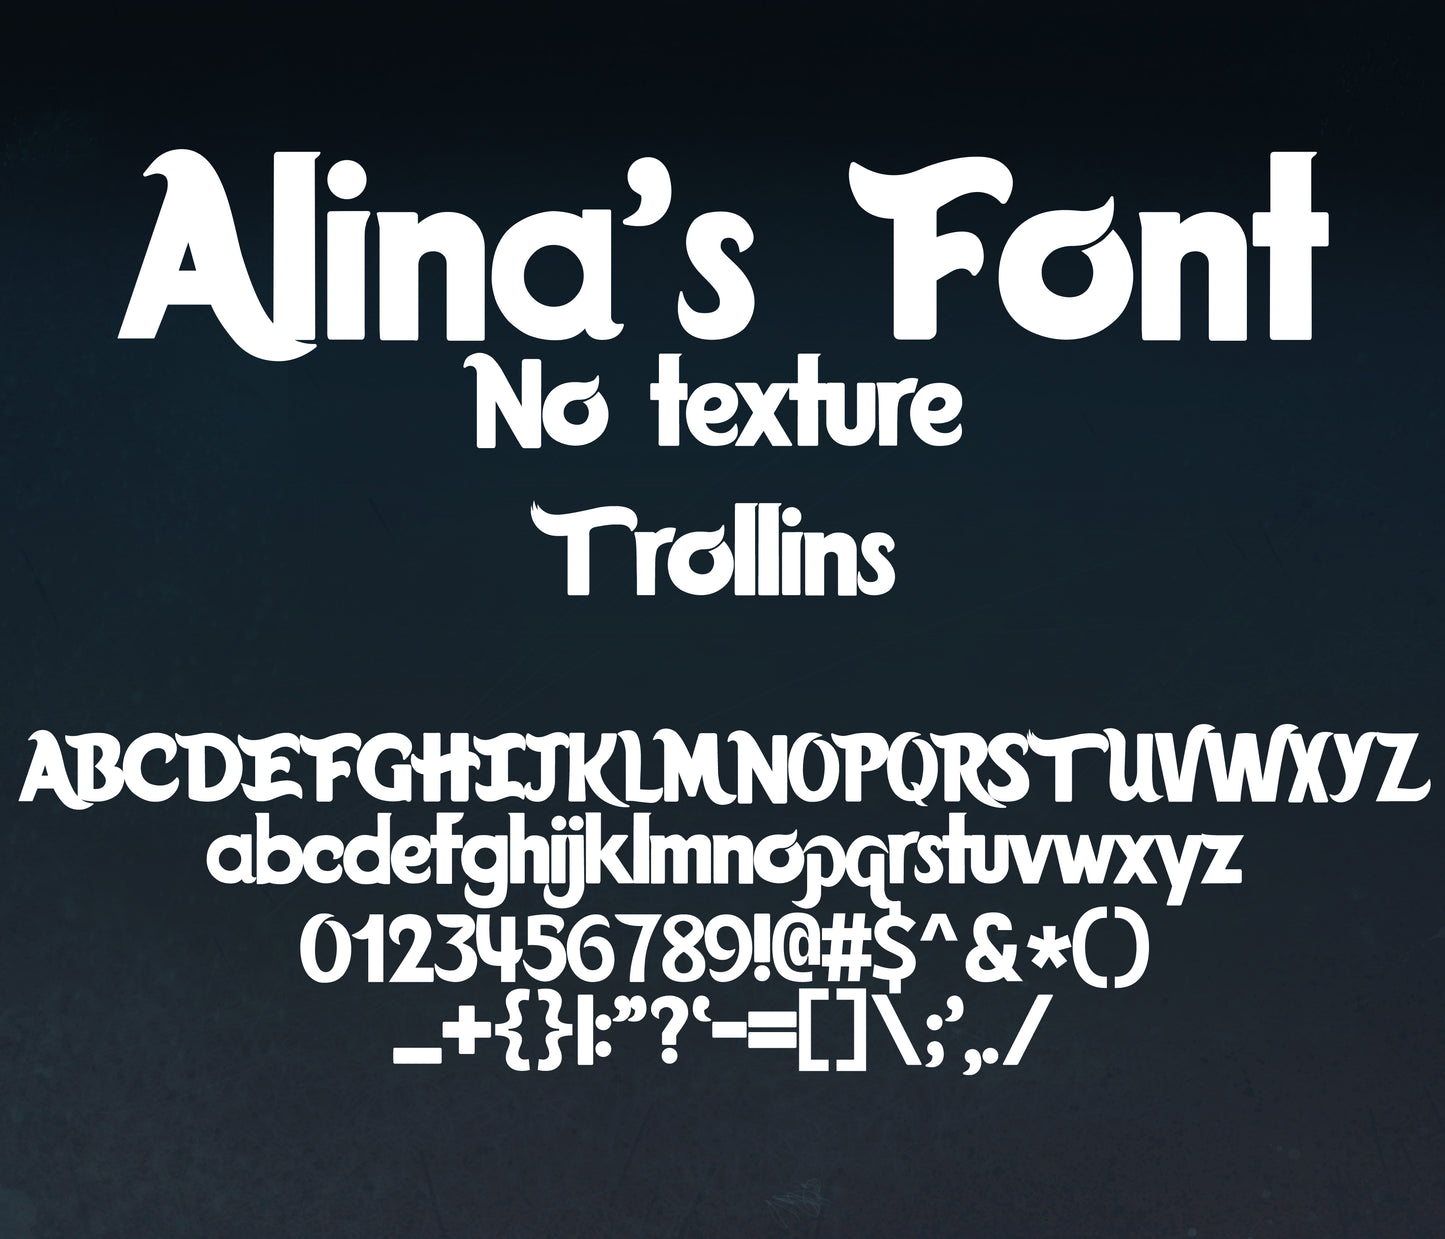 Trolls Band Together Textured Font